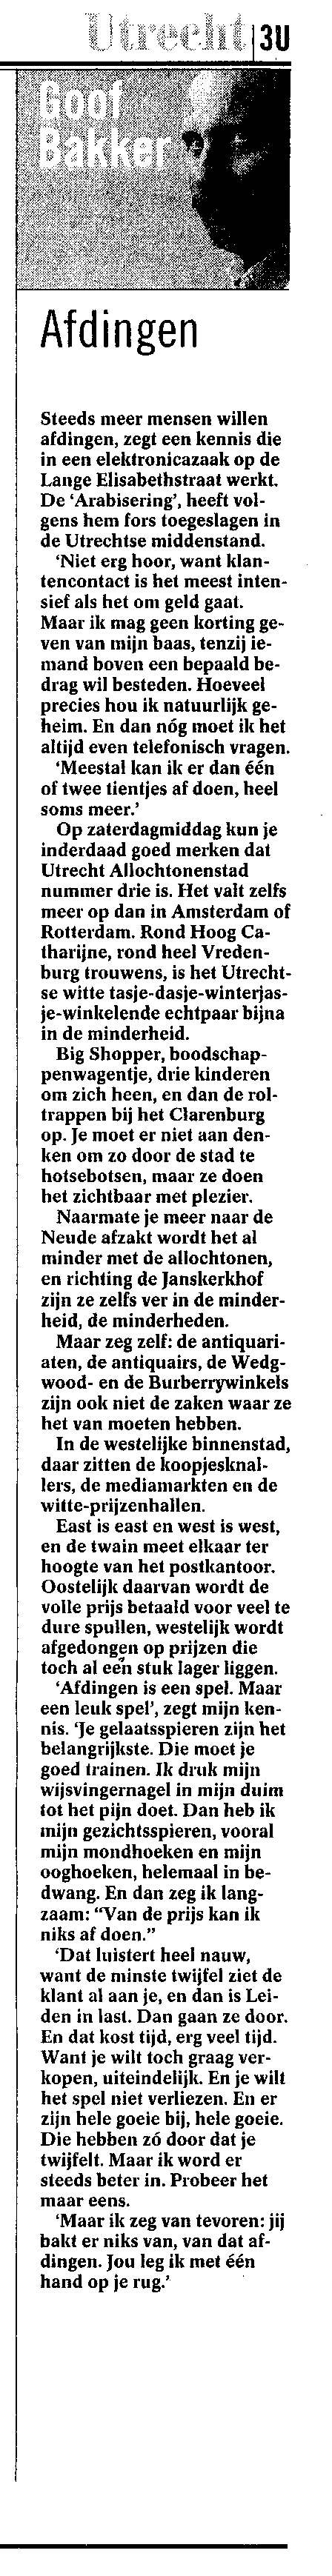 Volkskrant_2004-03-20-afdingen